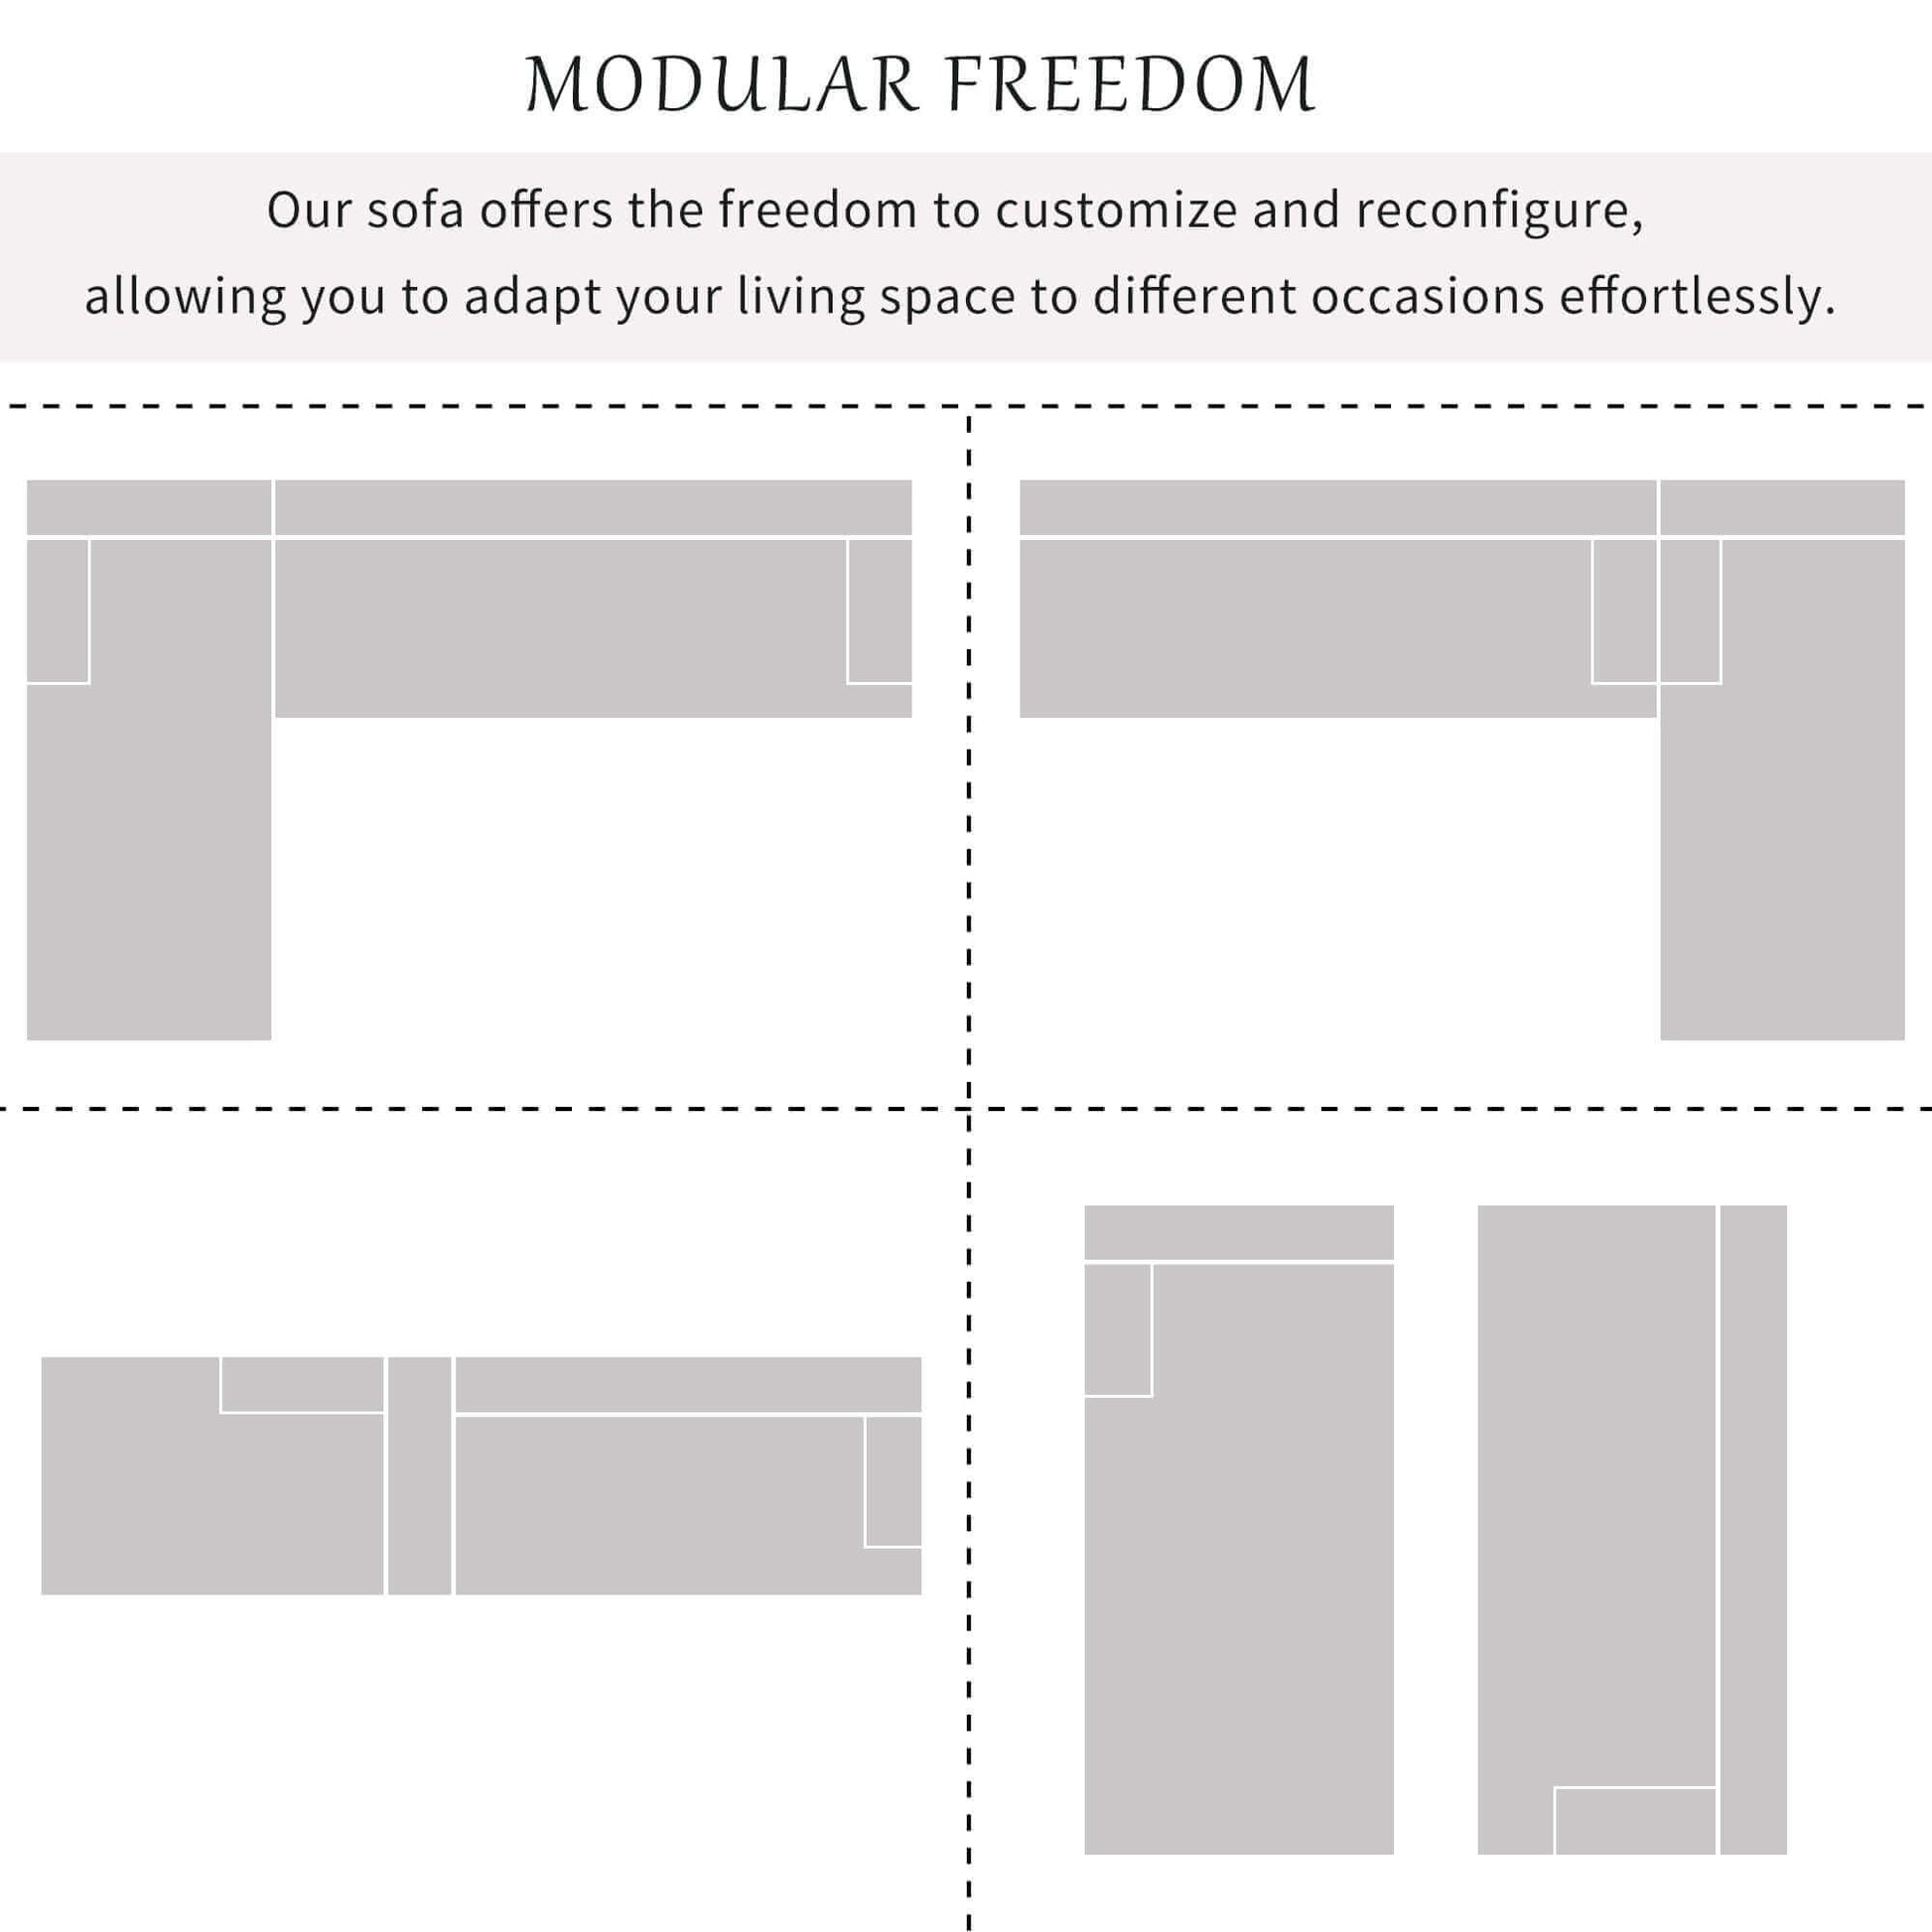 Modern Full Foam L-Shape Modular Chaise Sectional Sofa 109" - Revel Sofa 